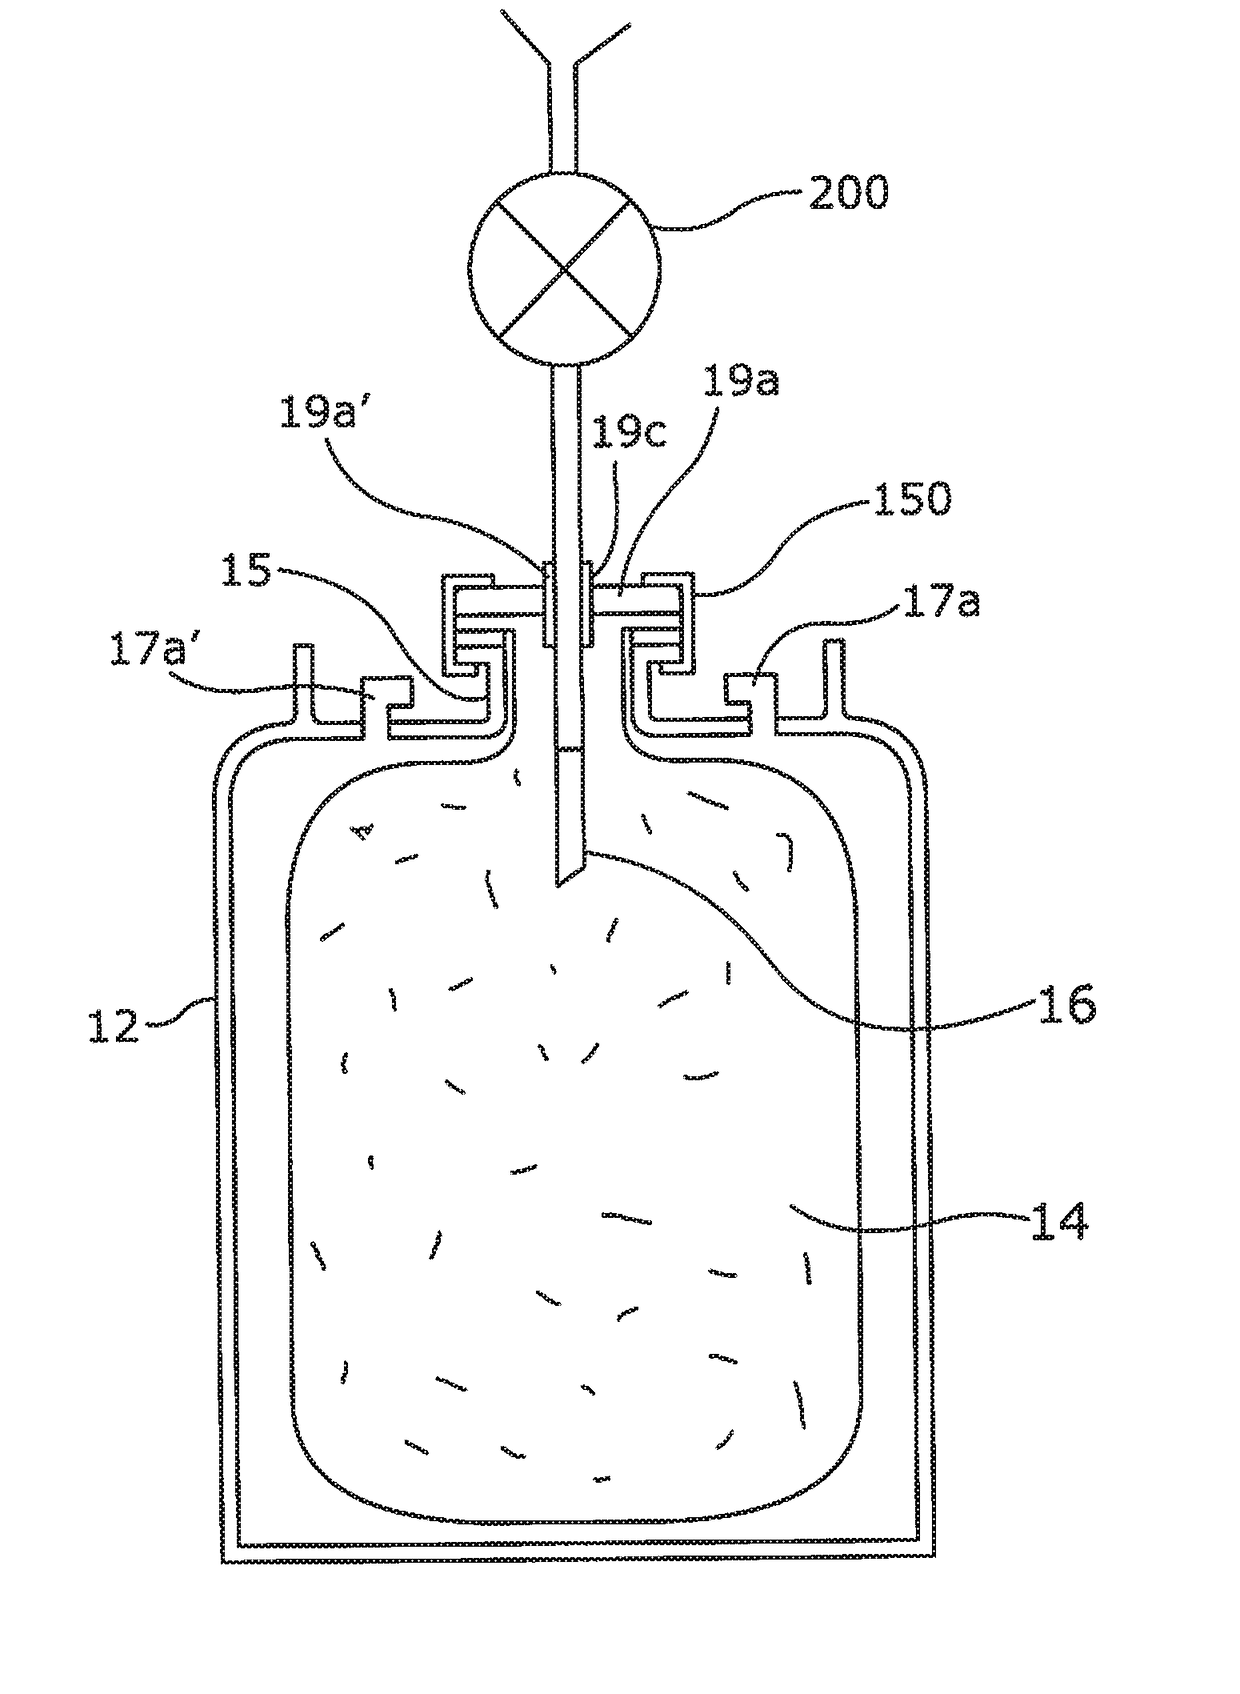 Fluid dispenser with isolation membrane